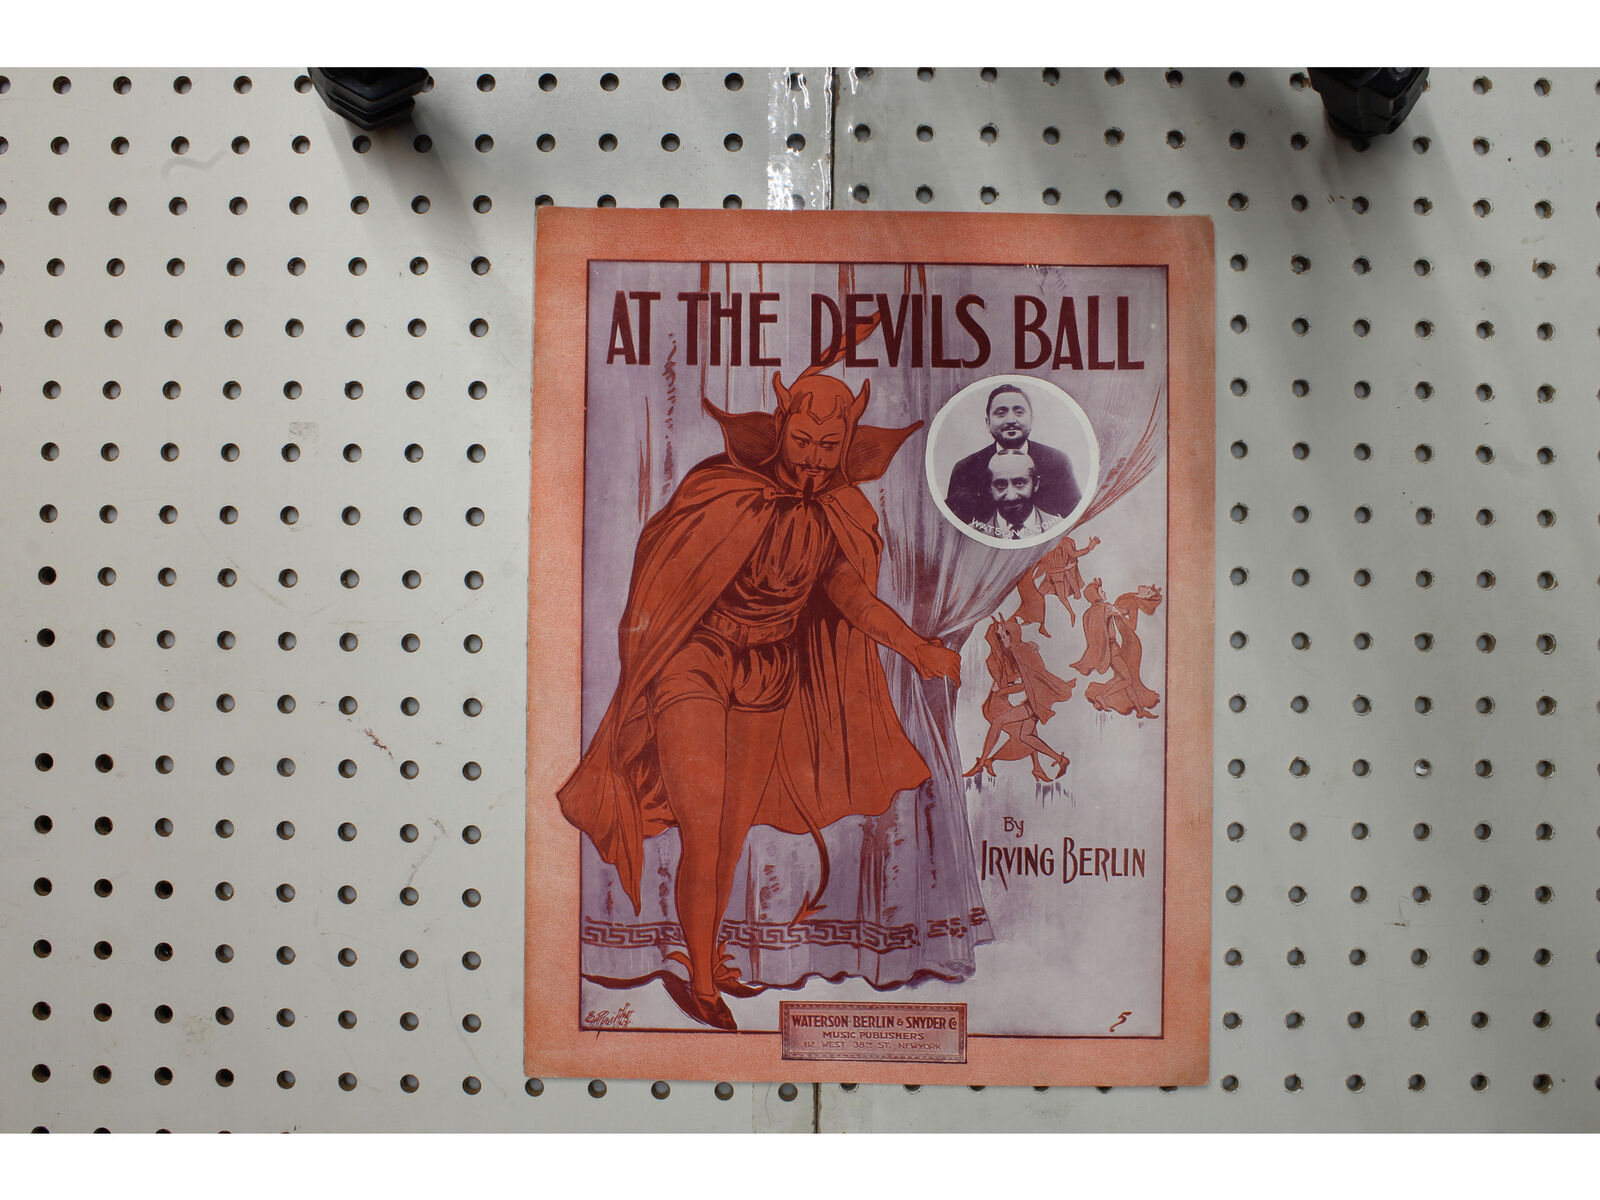 1913 - At the devils ball - Sheet Music